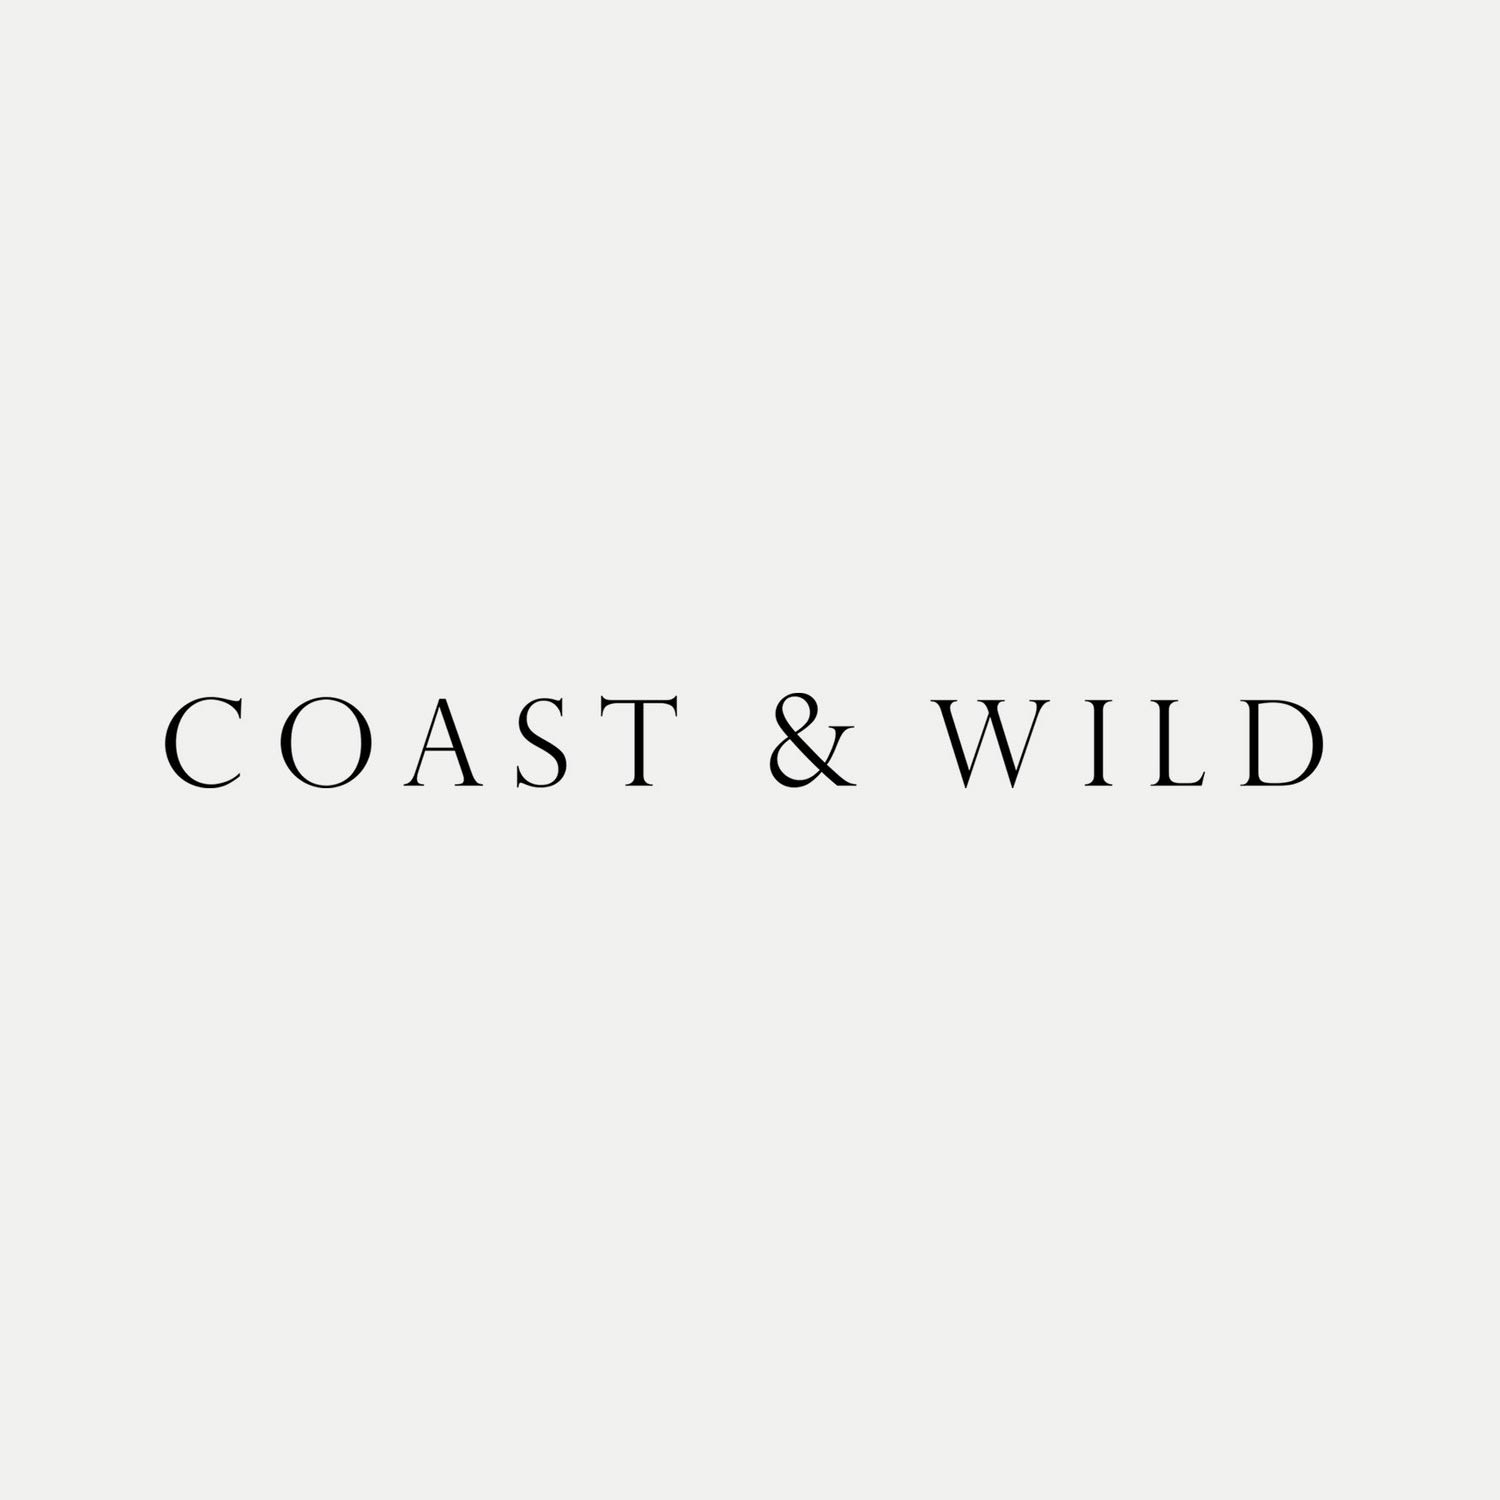 Coast & Wild's logo